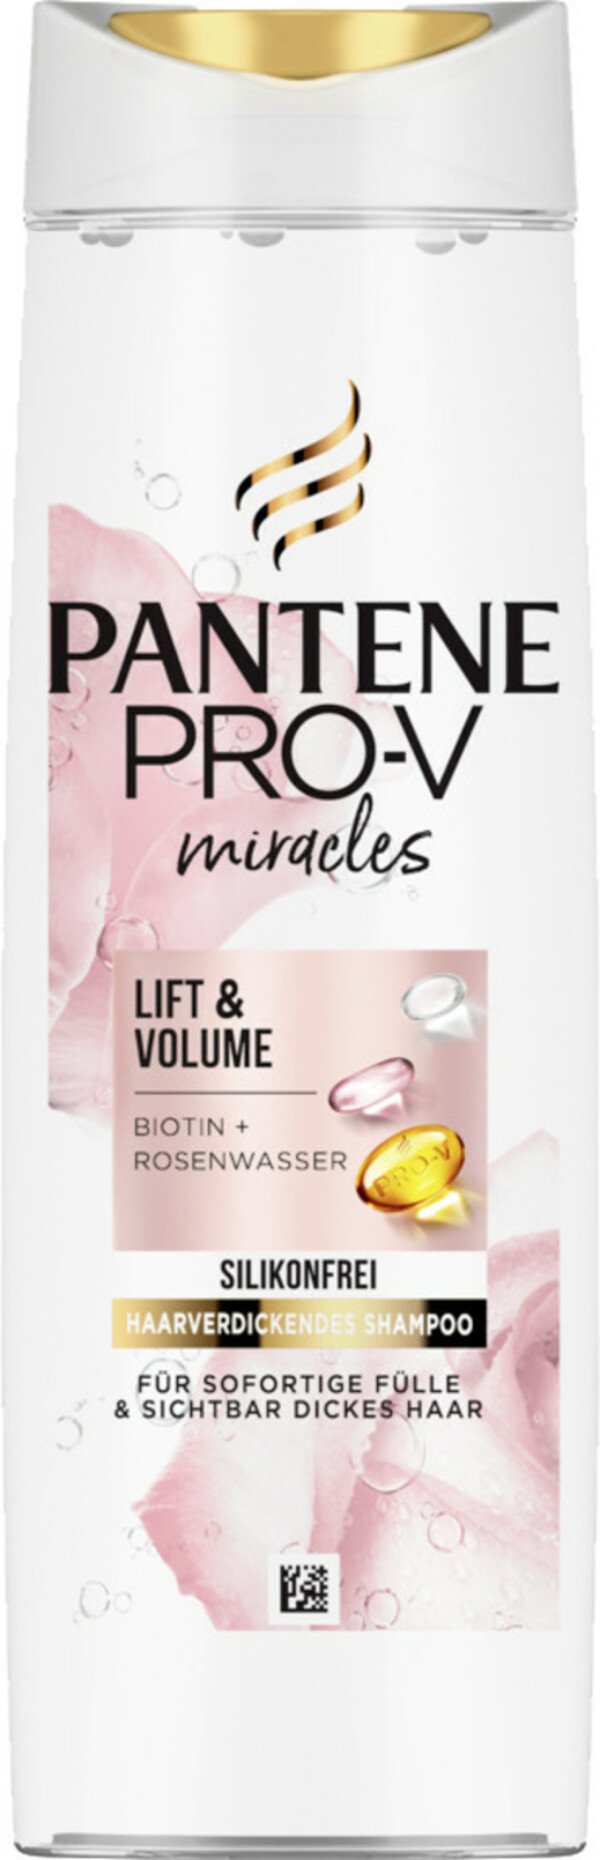 Bild 1 von Pantene Pro-V Miracles Lift & Volume haarverdickendes Shampoo 250ML